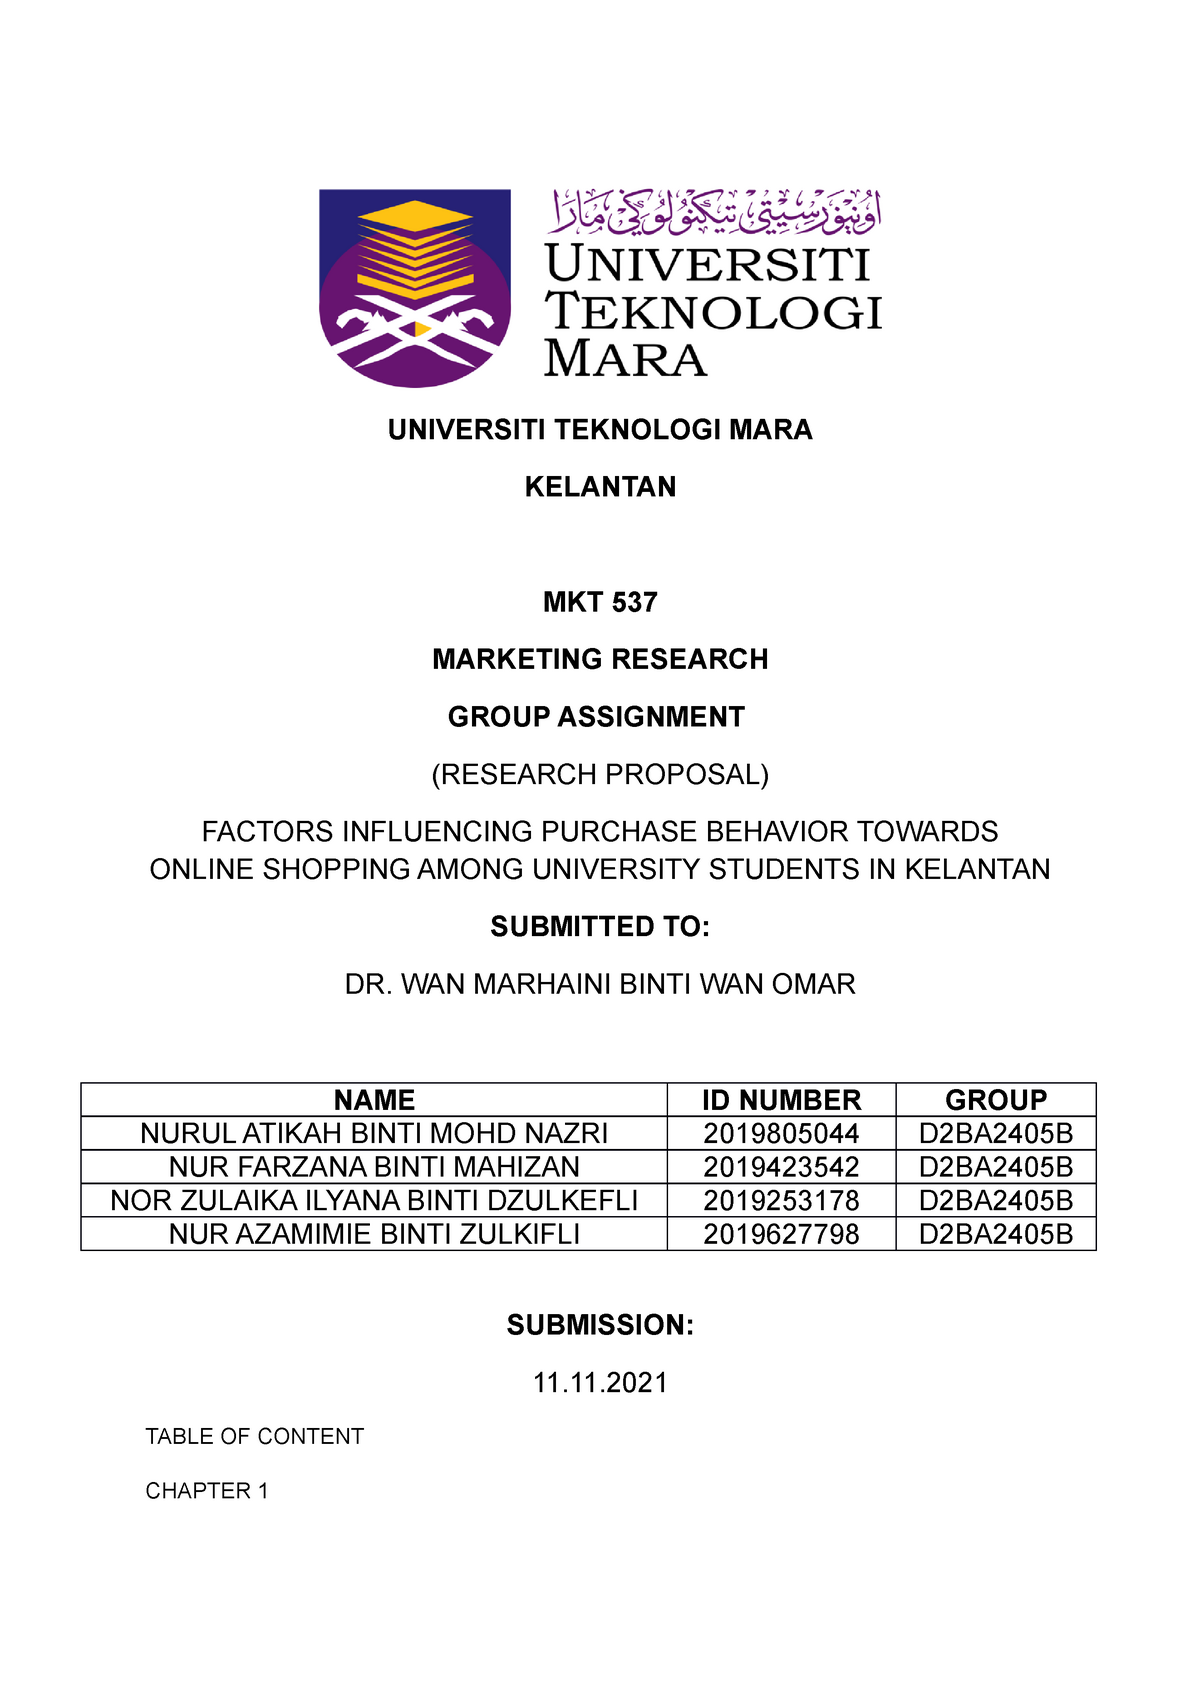 Research proposal in marketing - Marketing Research - UiTM - StuDocu